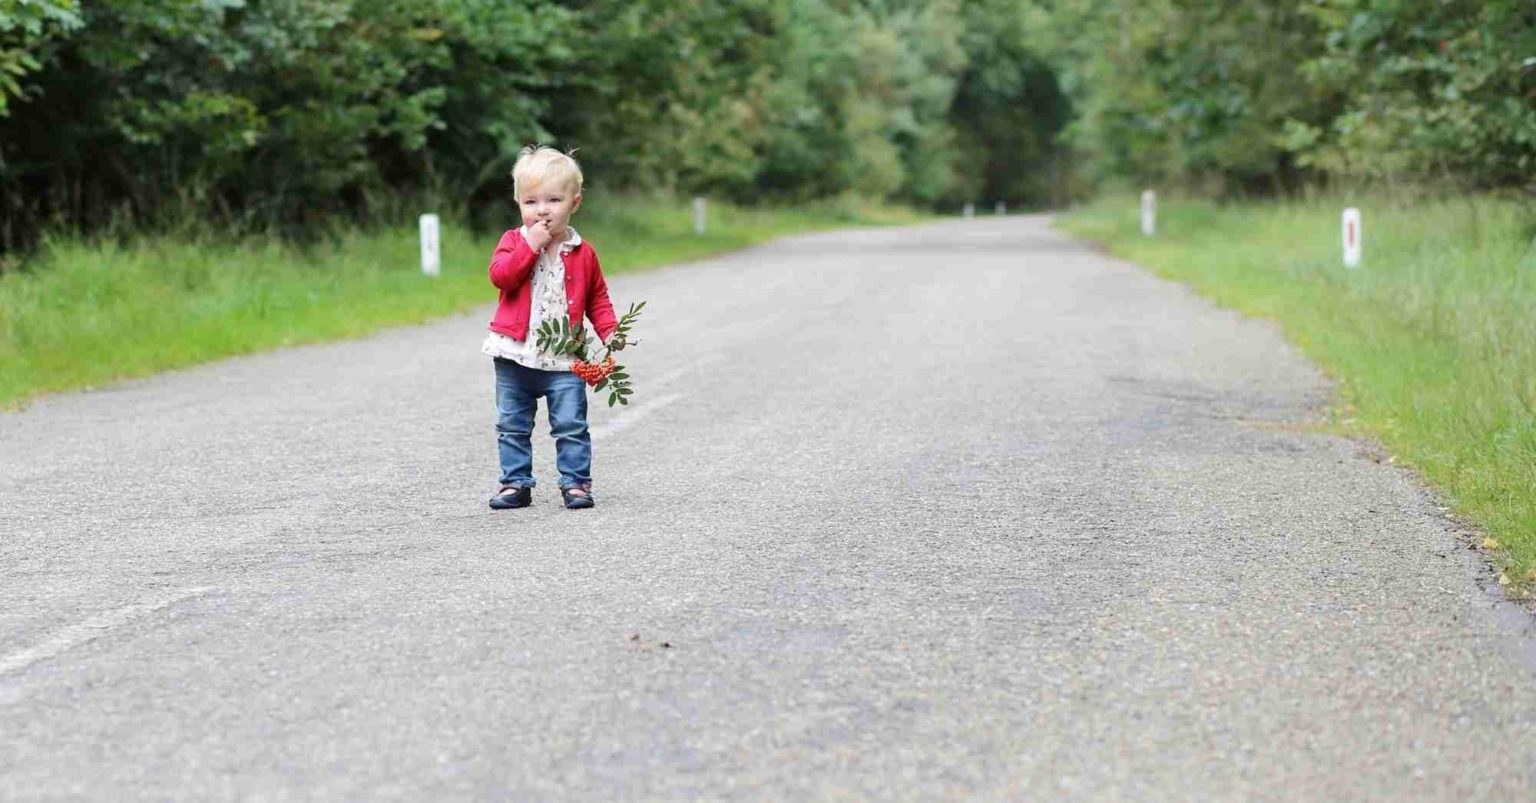 Проблема дети на дороге. Дорога жизни для детей. Малыш на дороге. Малыш идёт вдоль дороги.